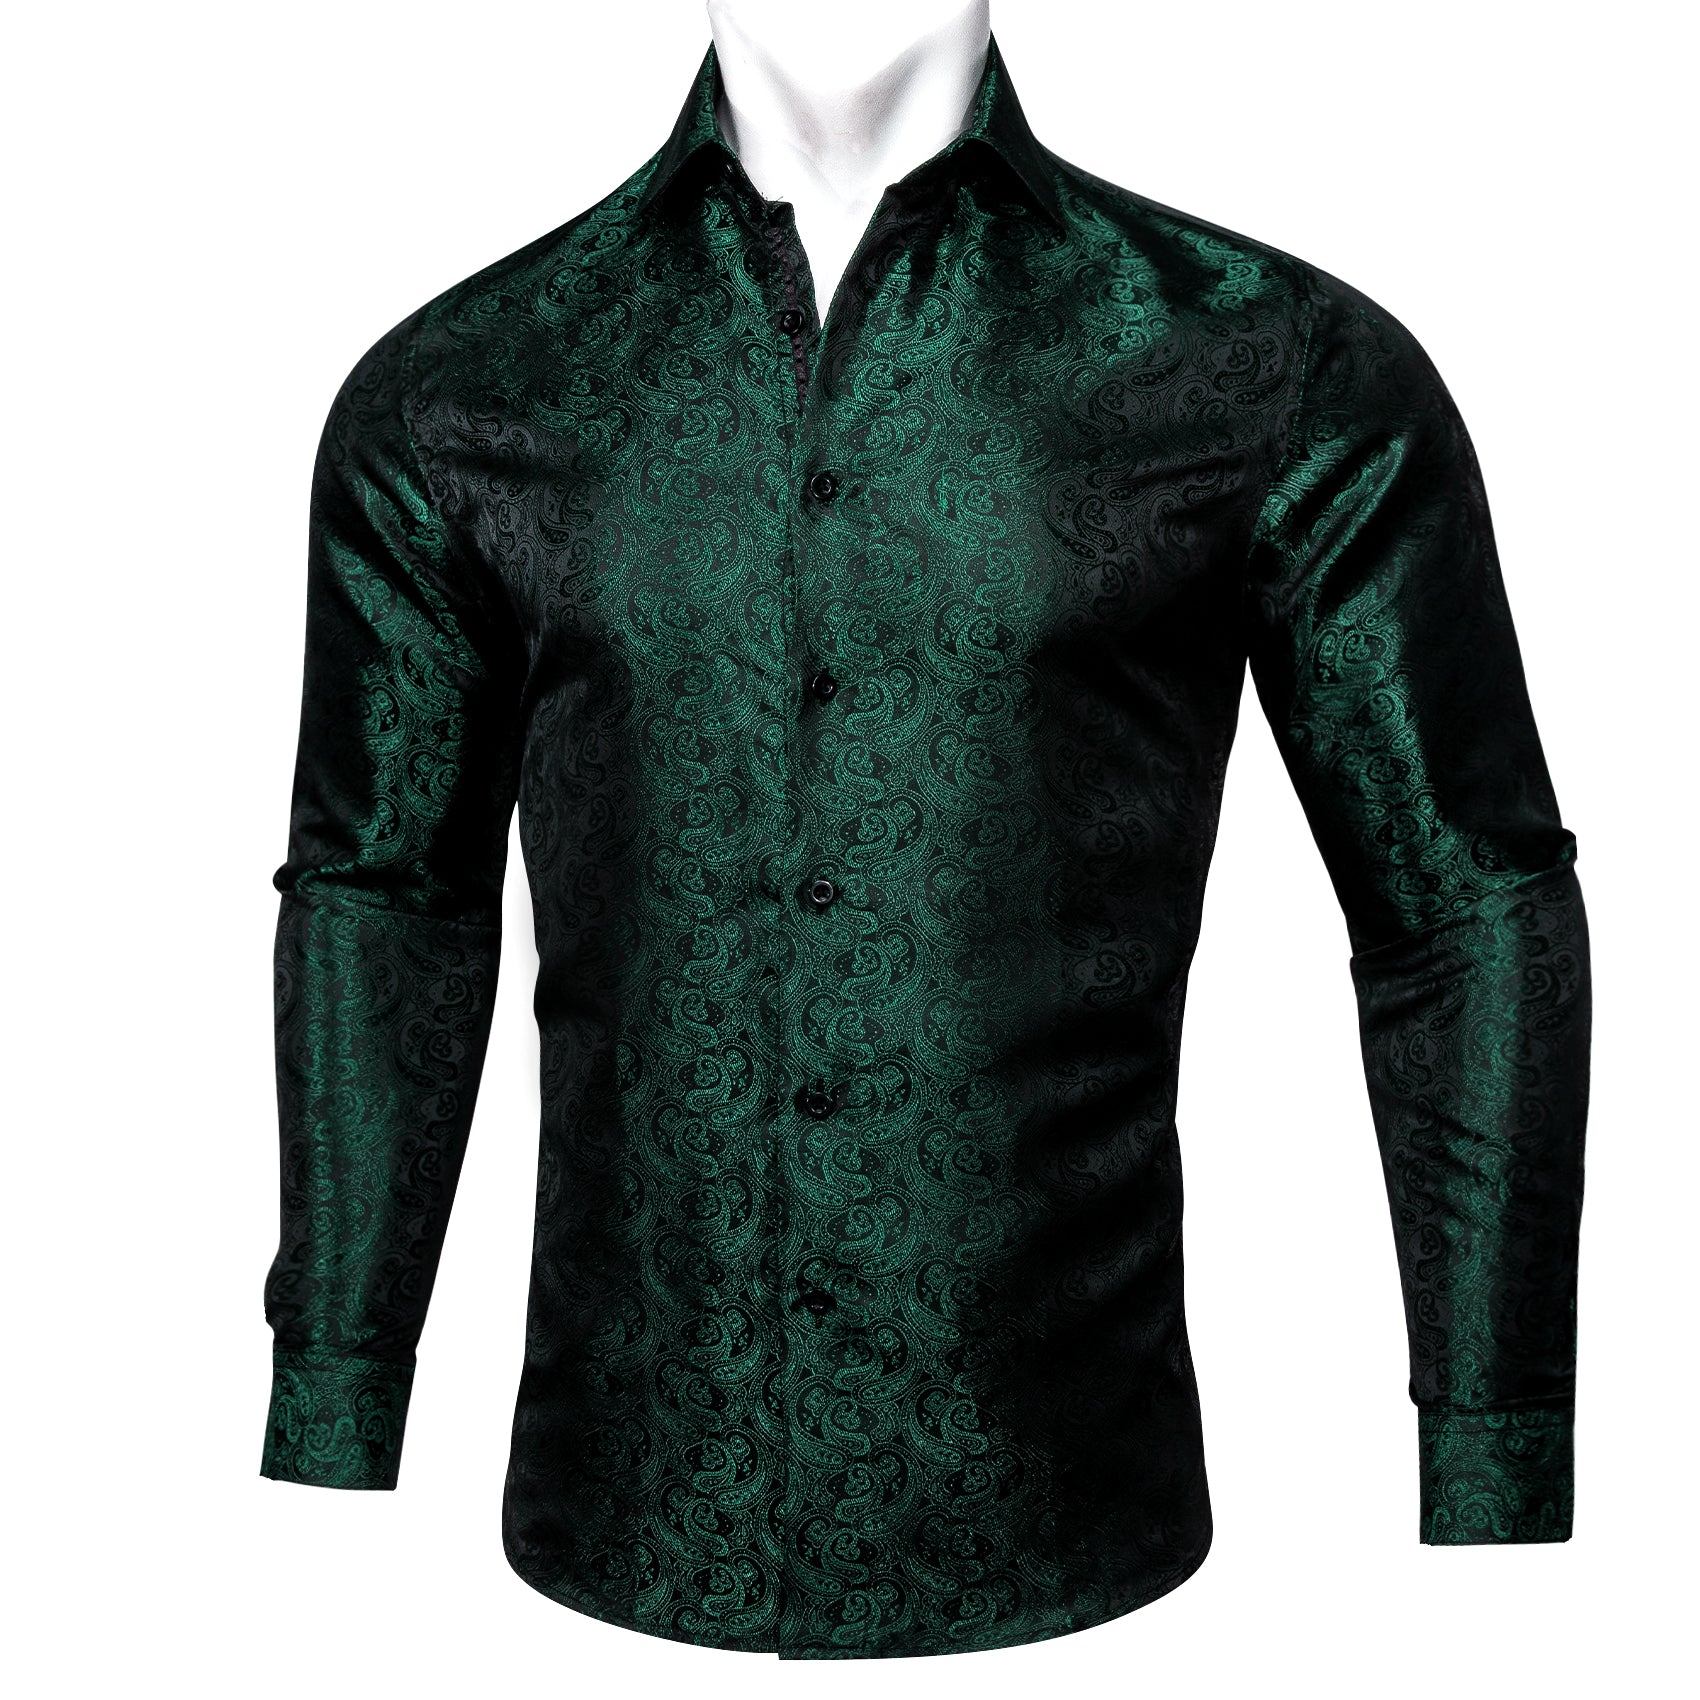 Barry.wang Button Down Shirt Green Paisley Men's Silk Shirt New Top Selling